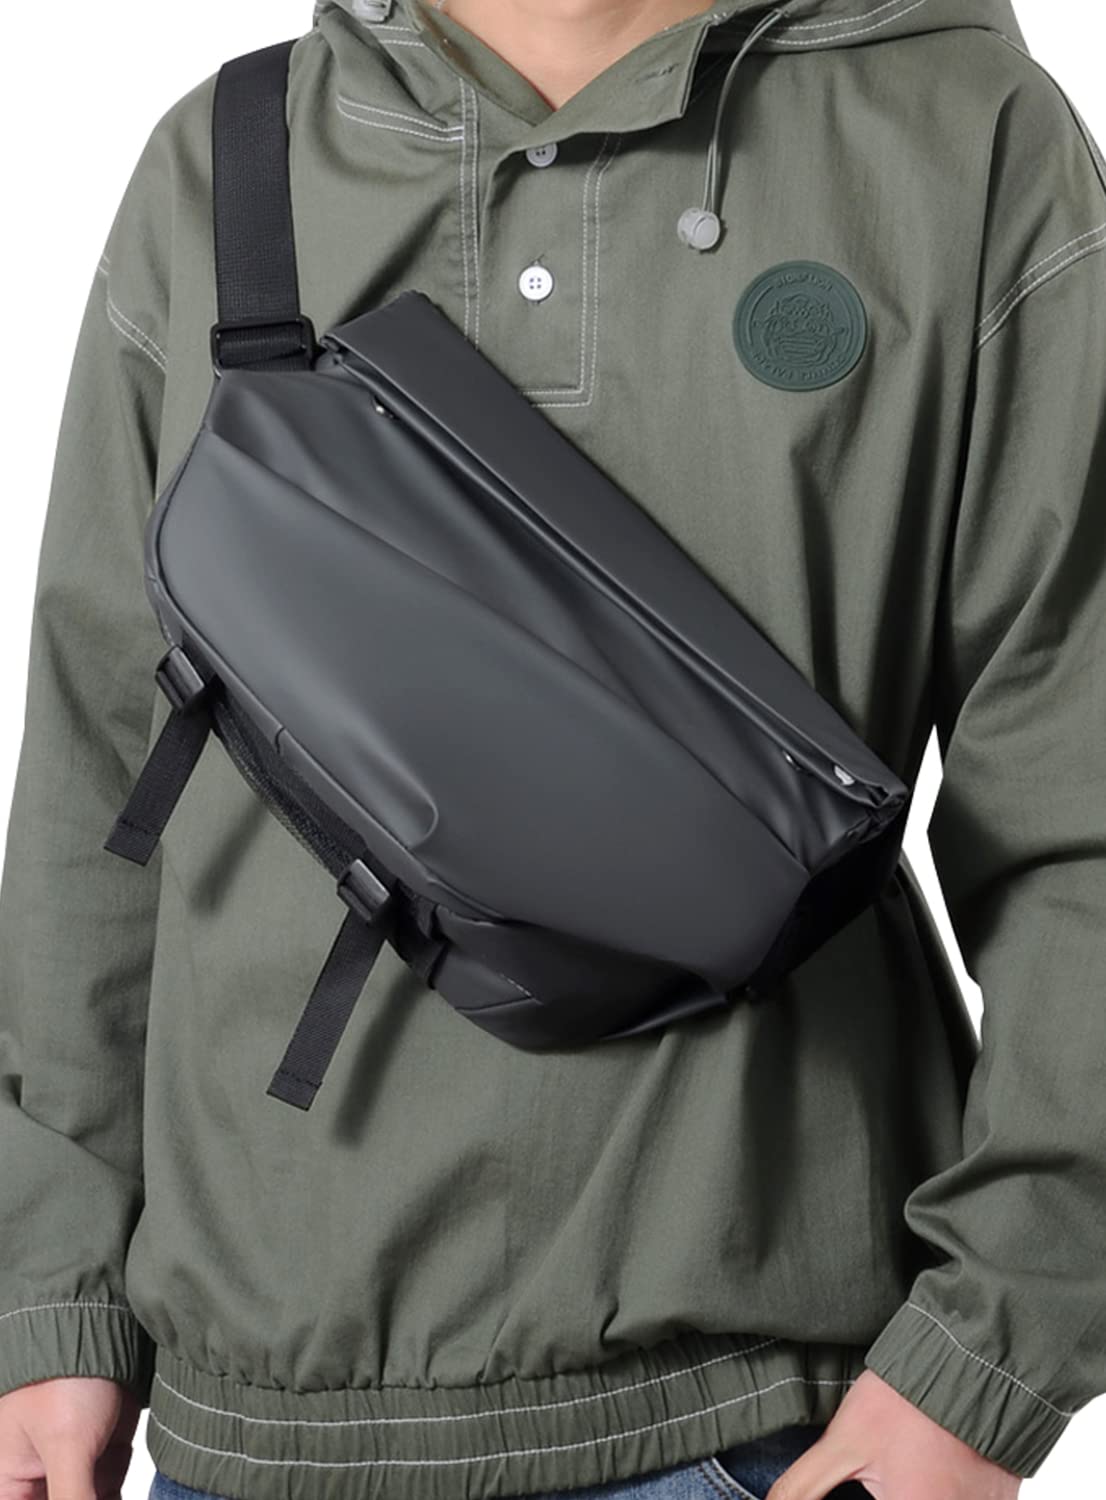 Veki Crossbody Bag for Men Large Capacity Sling Bags One Strap Backpack Waterproof Shoulder Pack for Hiking Motorcycle Riding (Dark Grey)